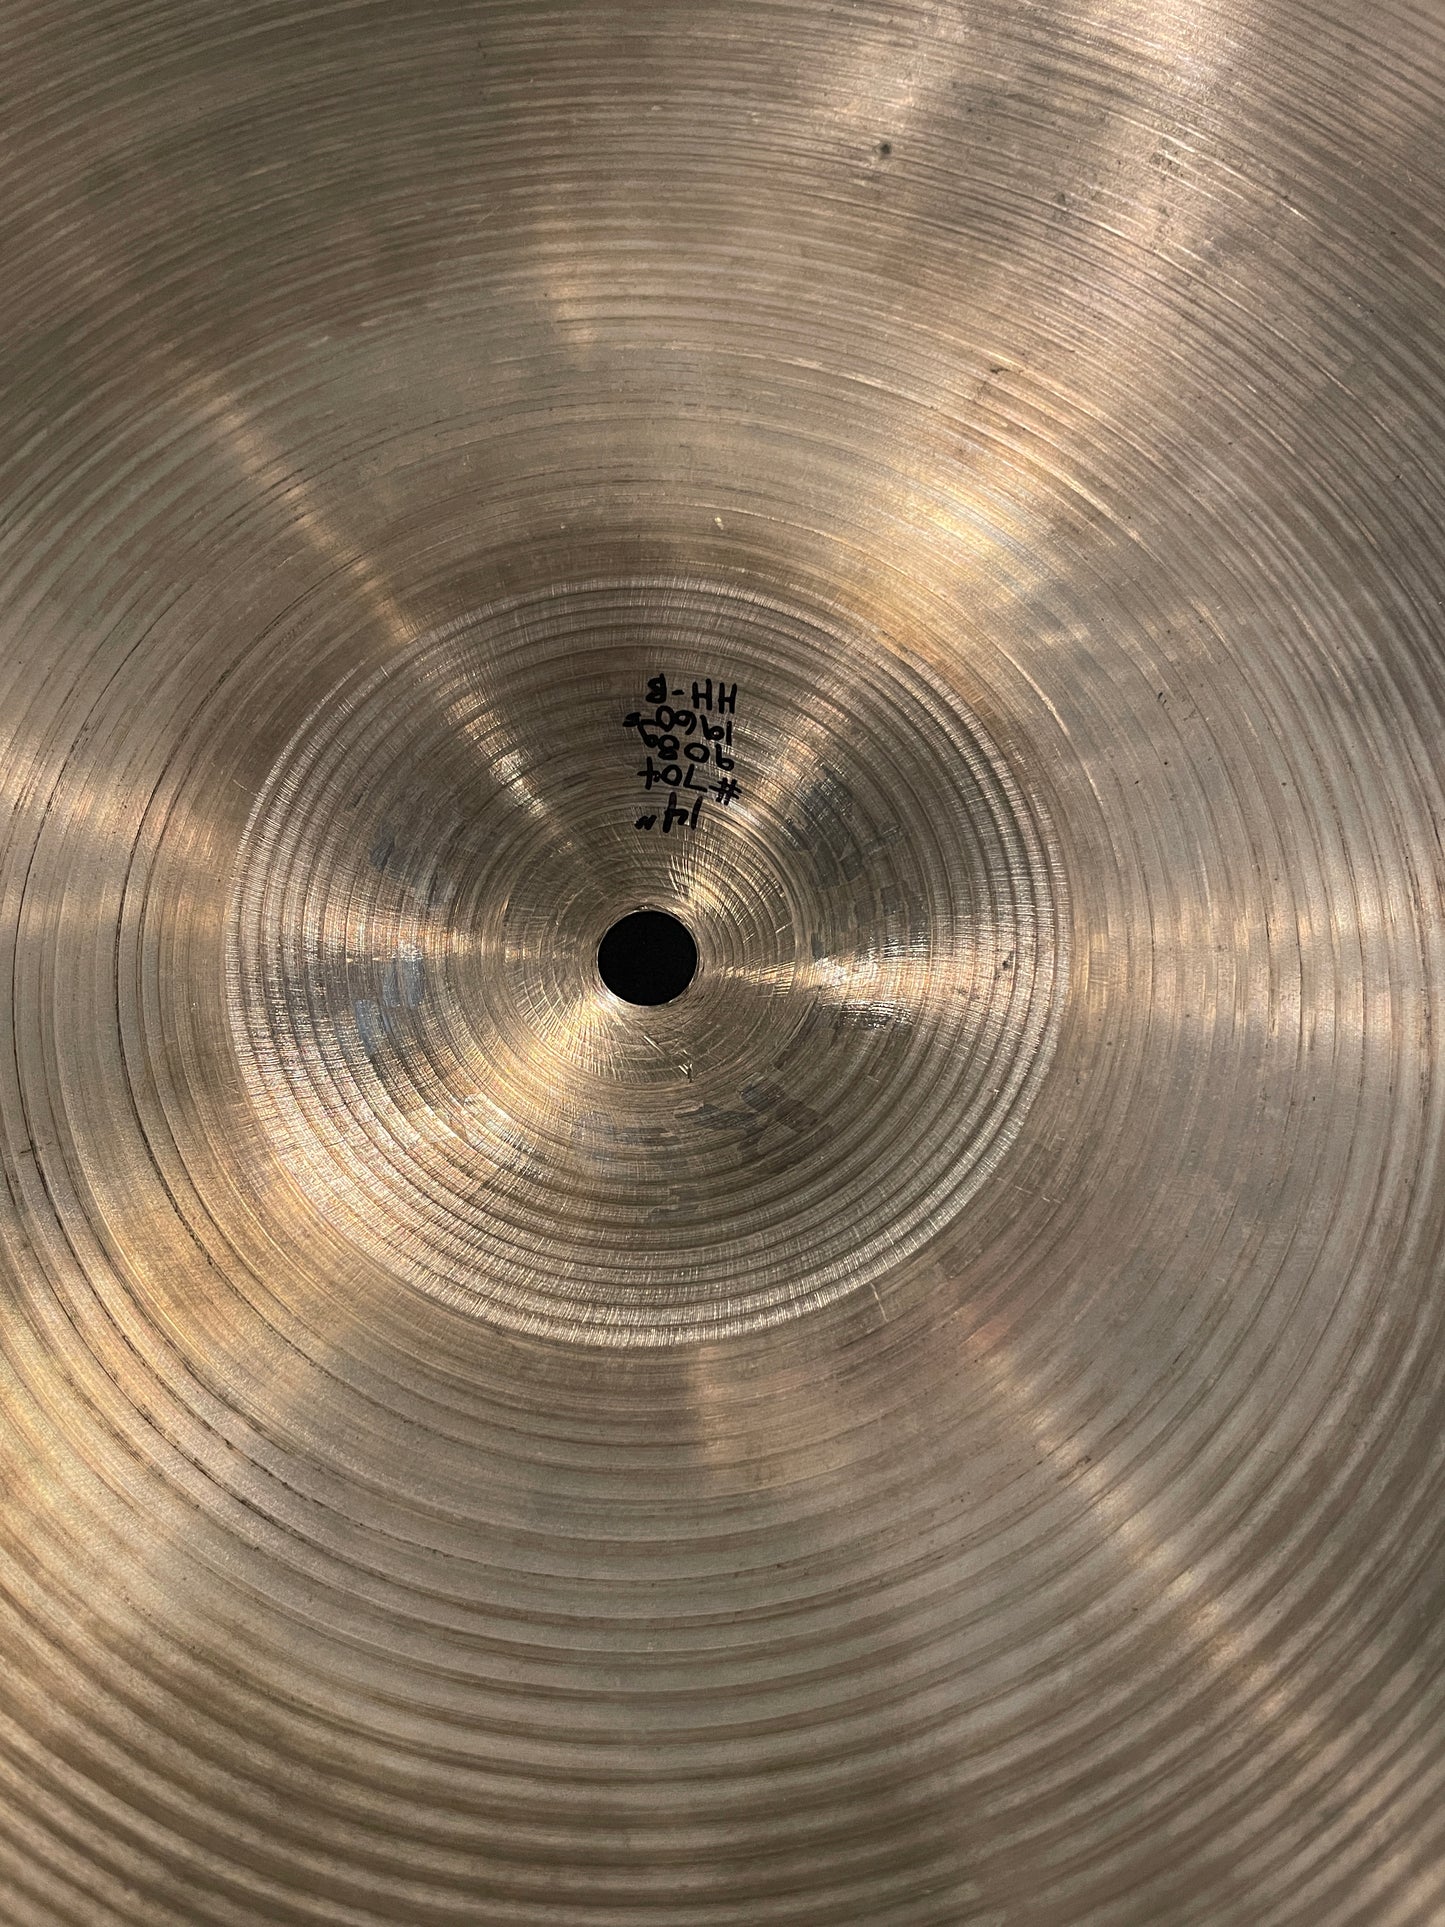 14" Zildjian A 1960s Hi-Hat Cymbal Set 794g/908g #704 *Video Sample*